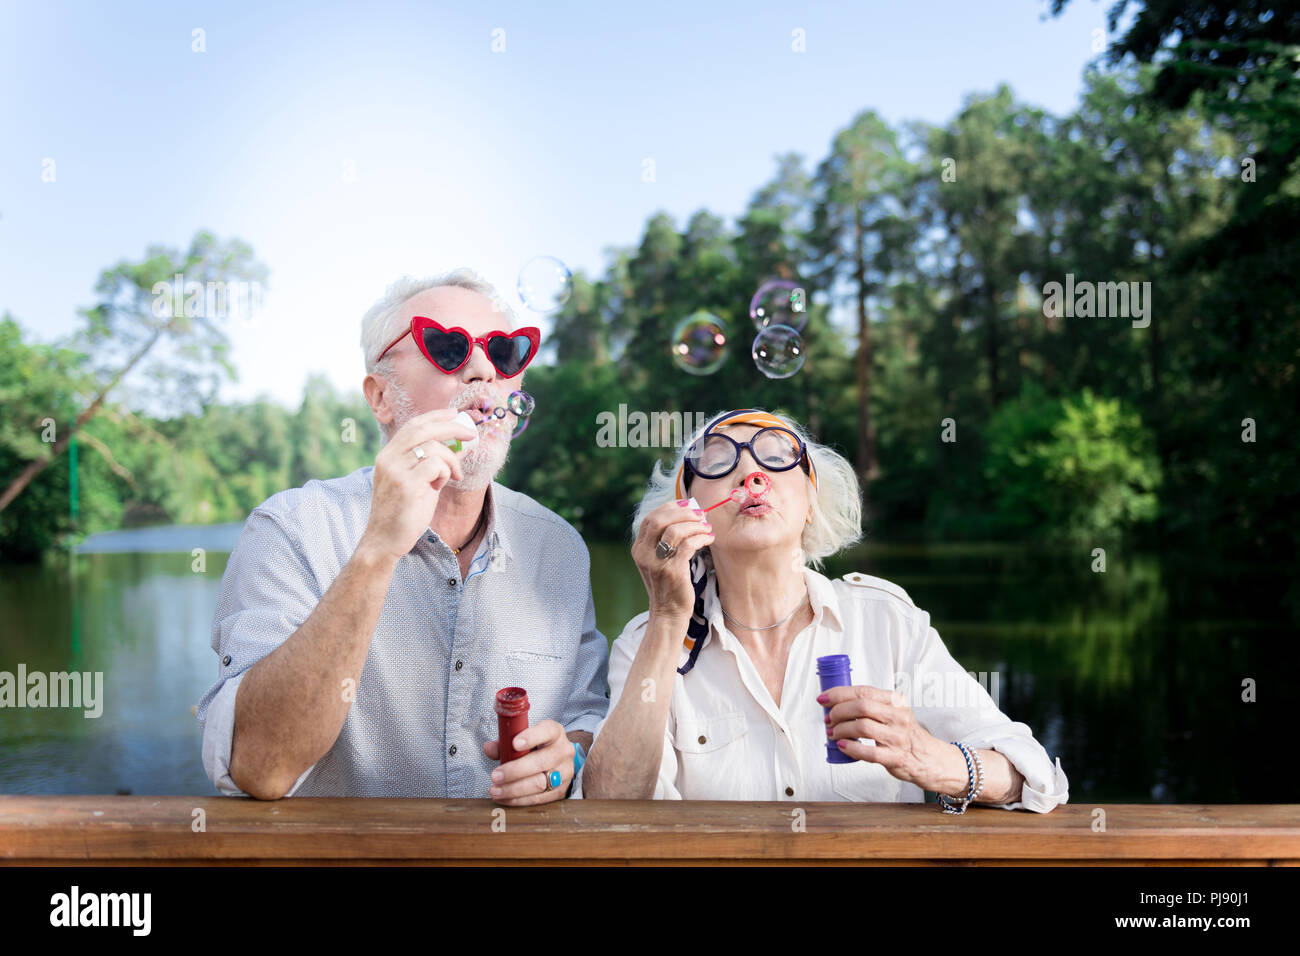 Funny elderly man wearing red heart shape sunglasses using soap bubbles Stock Photo